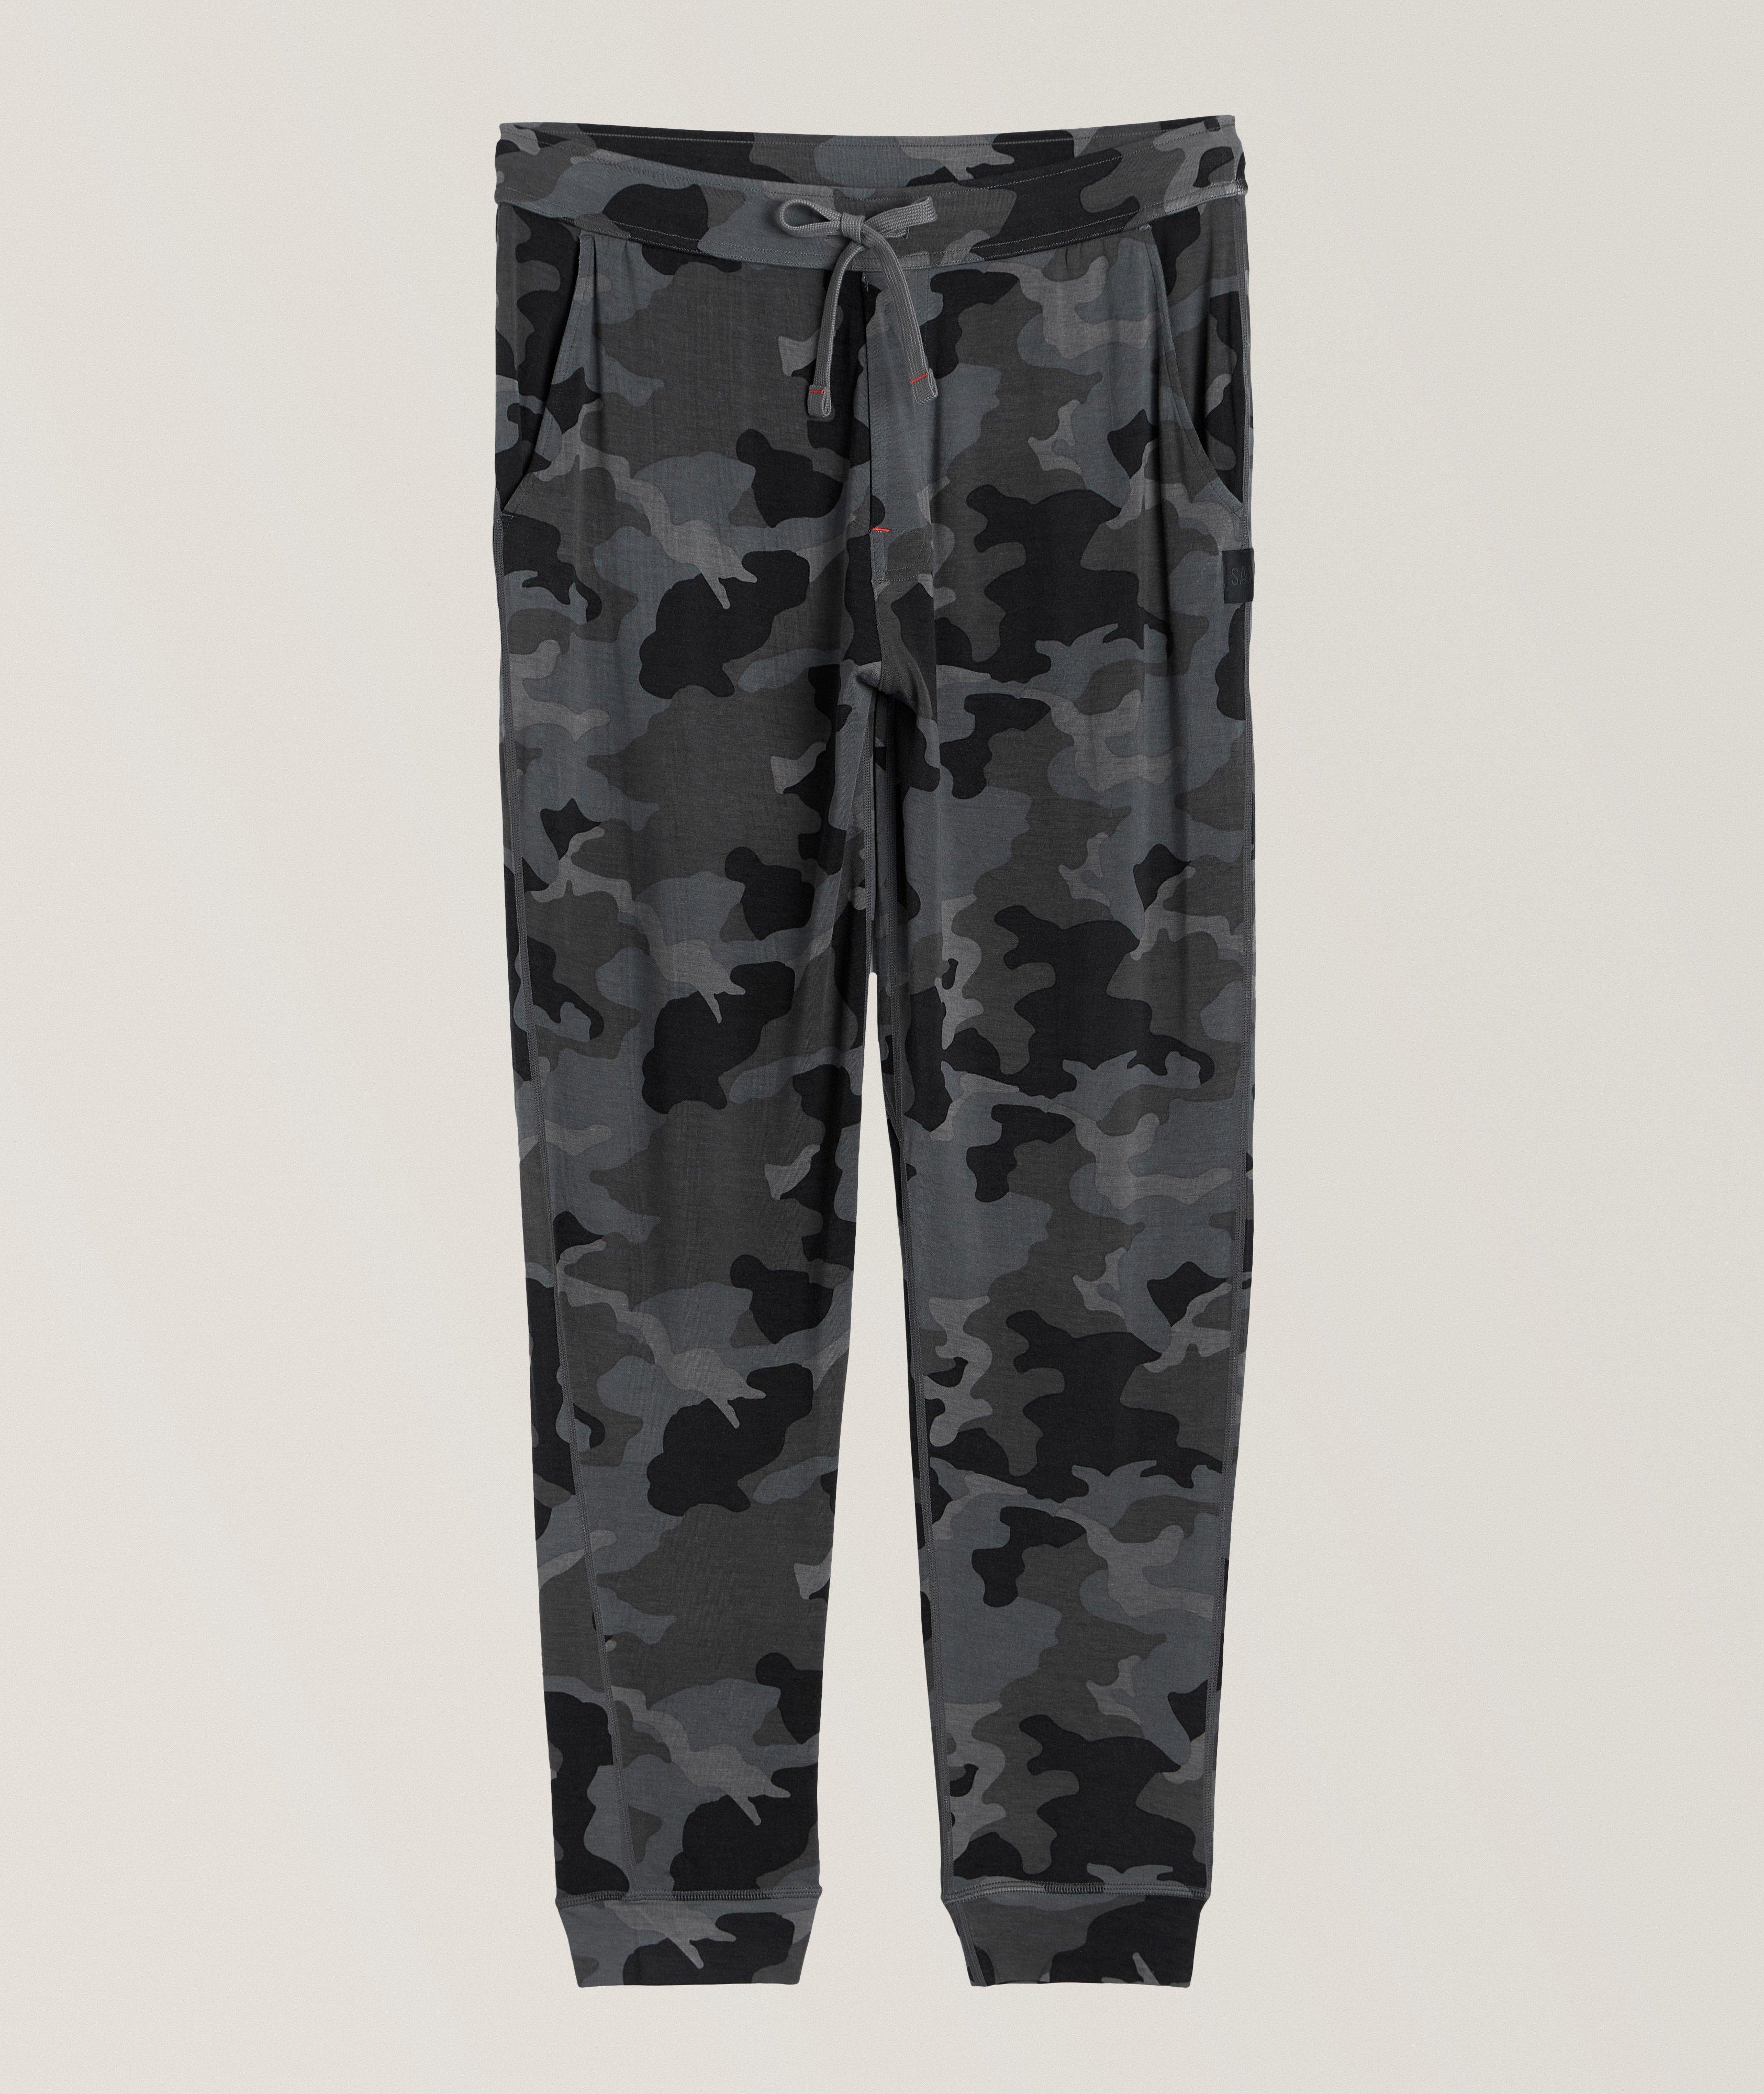 Snooze Camouflage Lounge Pants image 0